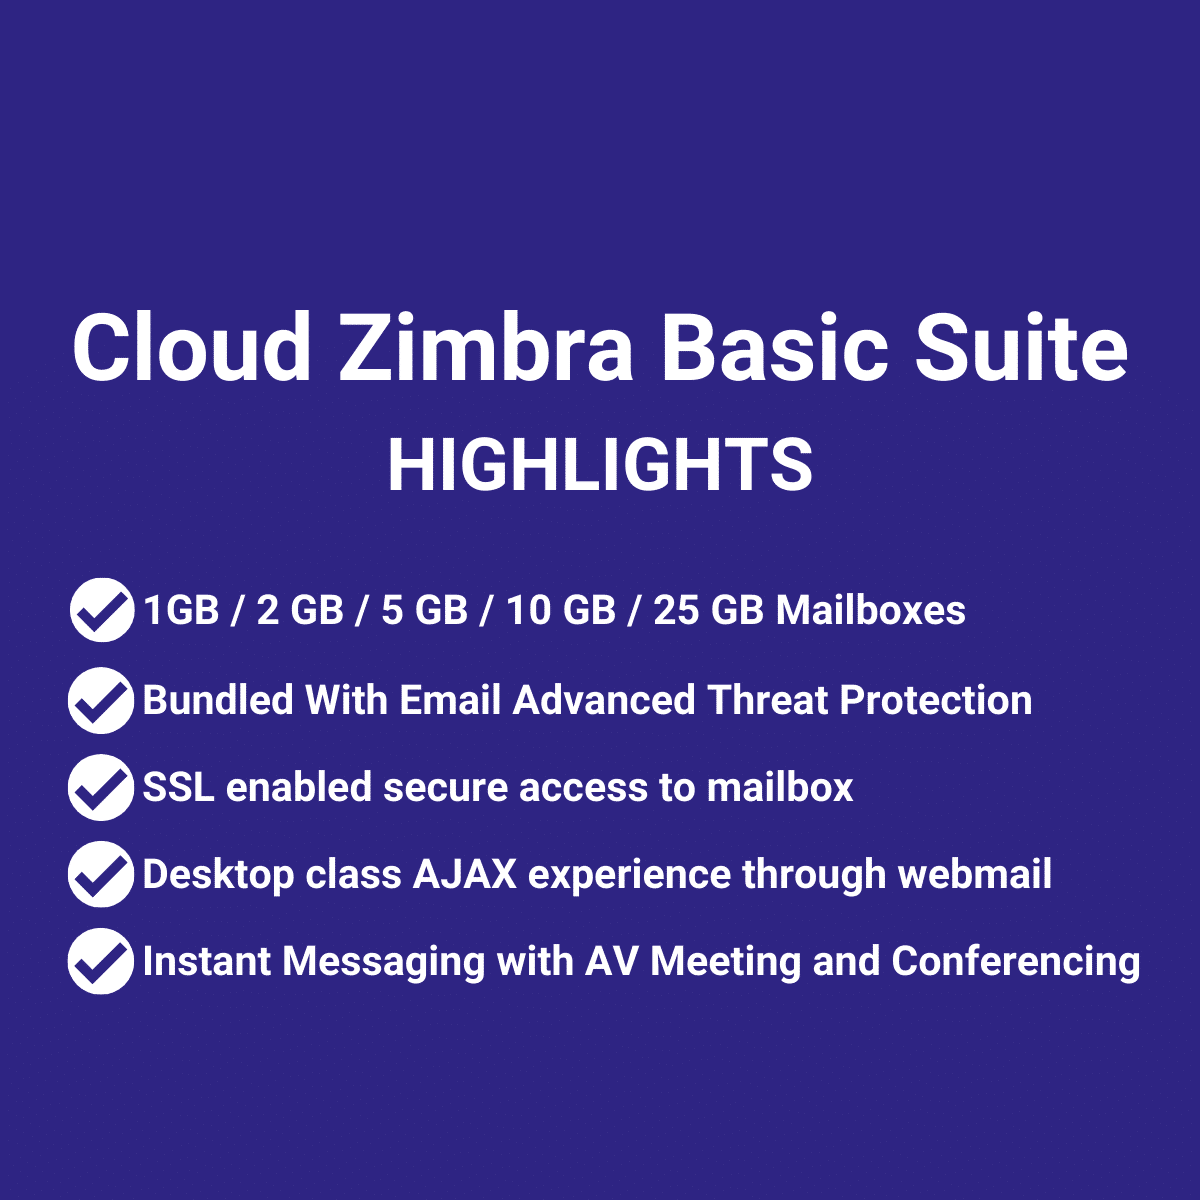 Benefits of Cloud Zimbra Basic Suite